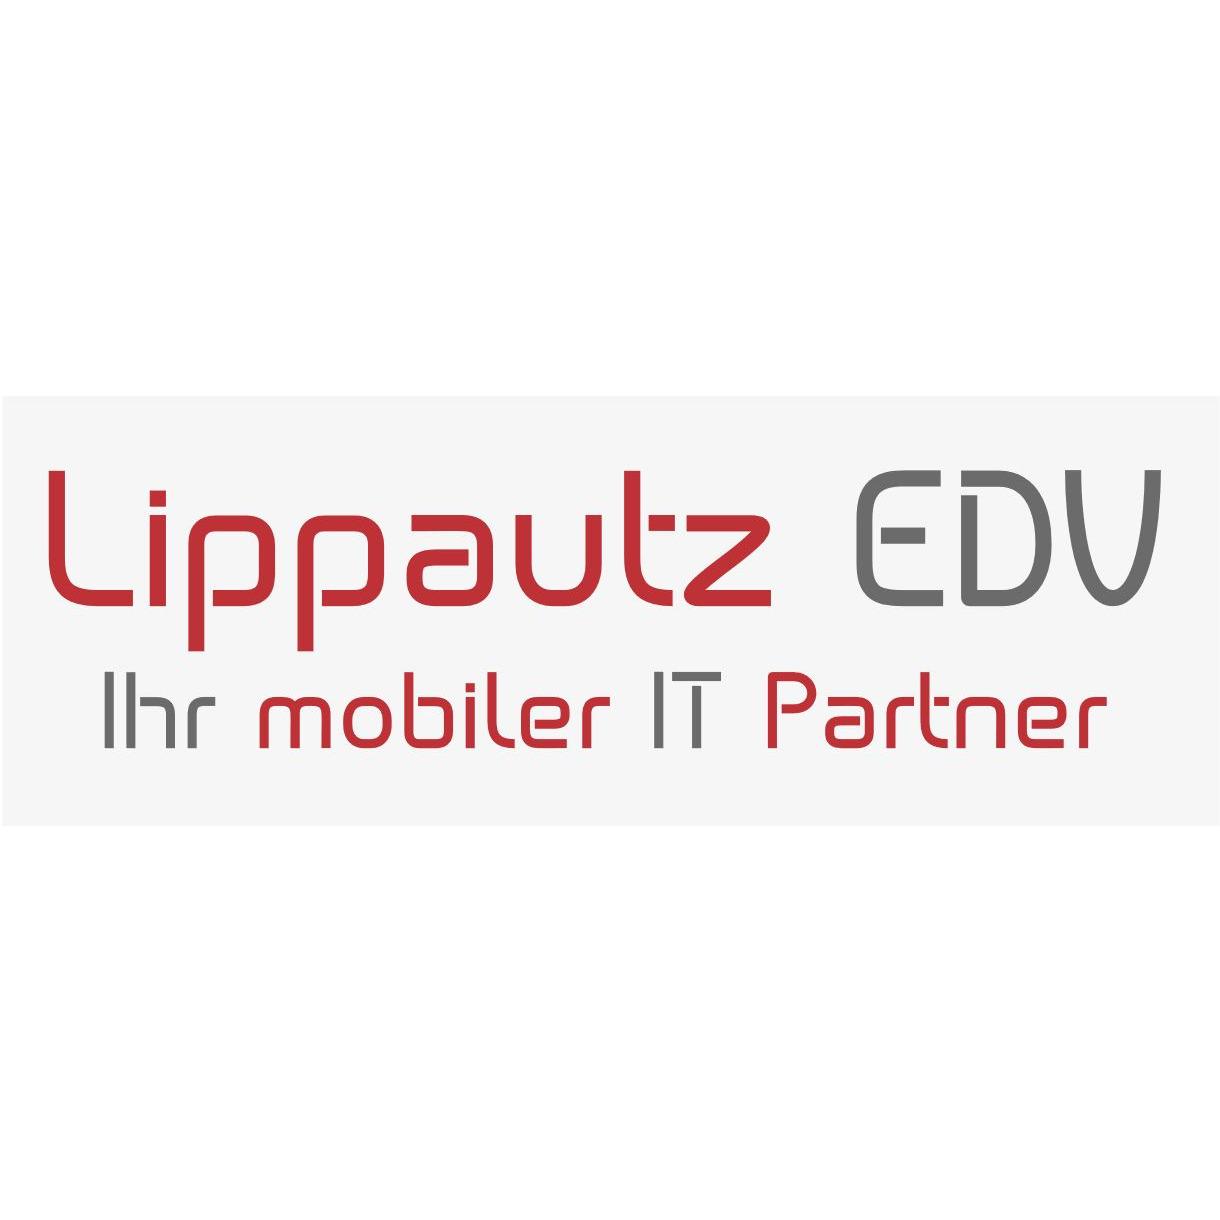 Lippautz EDV Logo